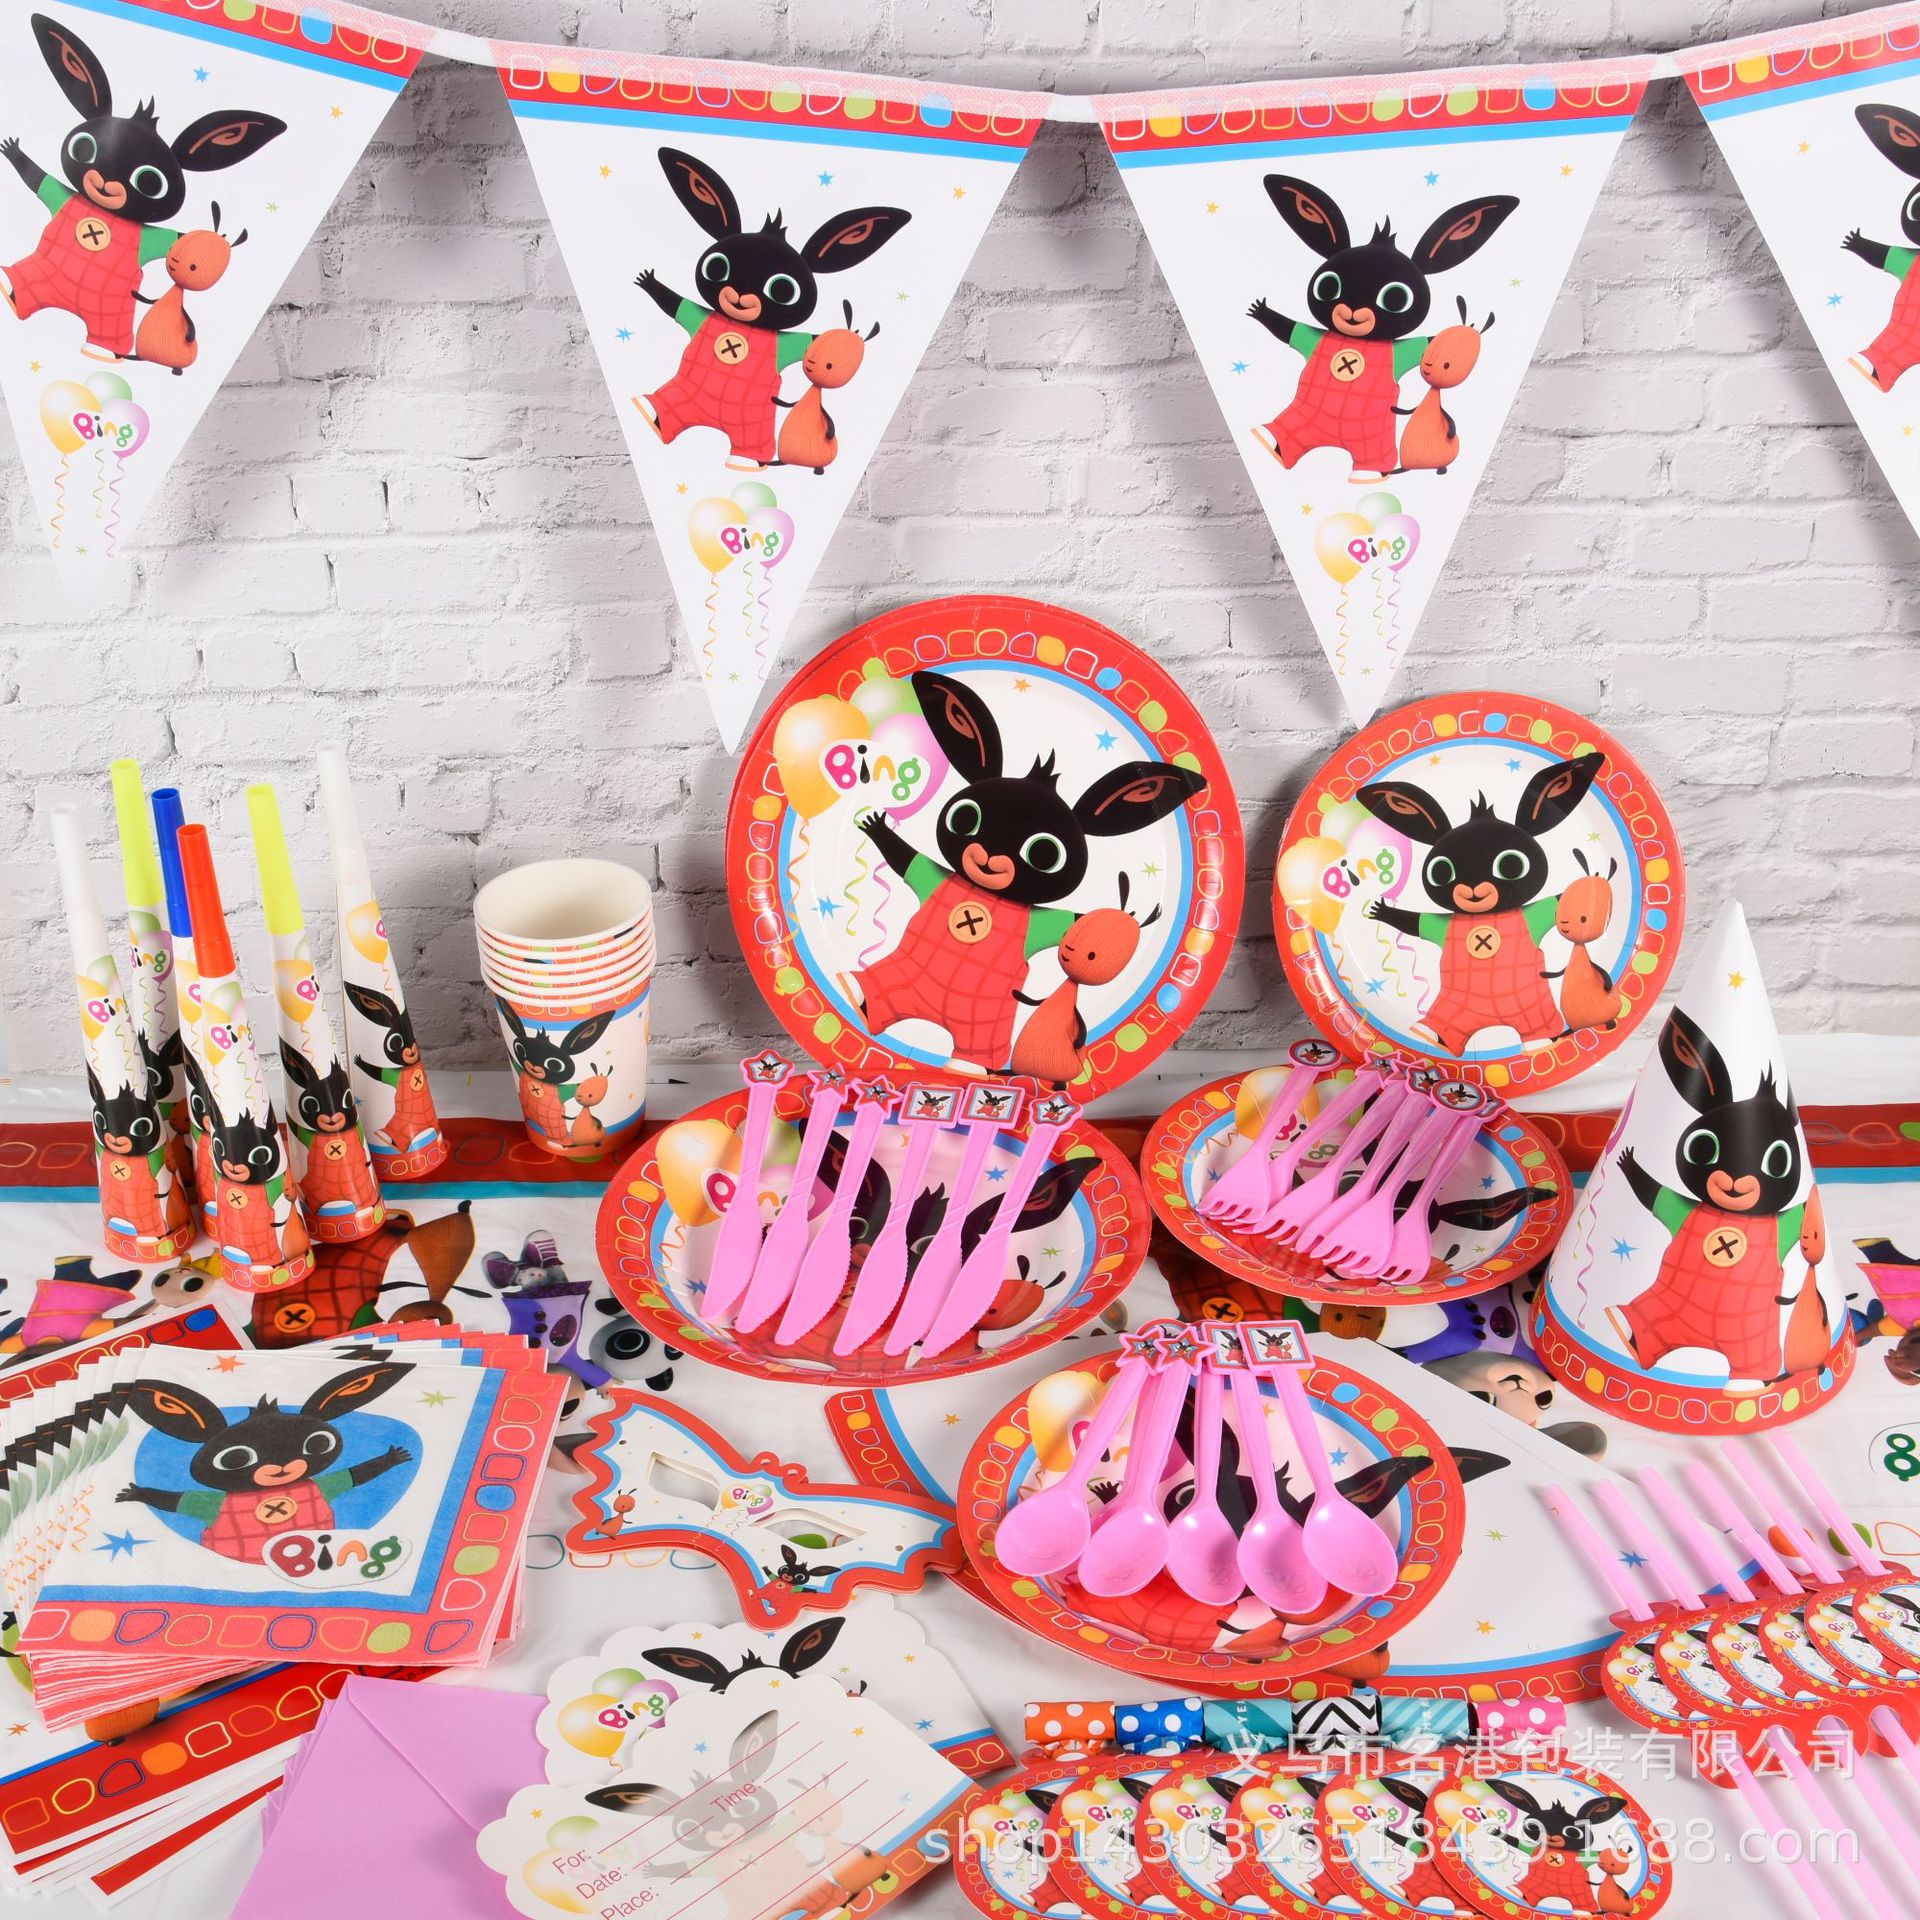 Children's Birthday Party Supplies Bing Rabbit Party Arrangement Scene Supplies Paper Cups Paper Plates Disposable Cutlery Gift